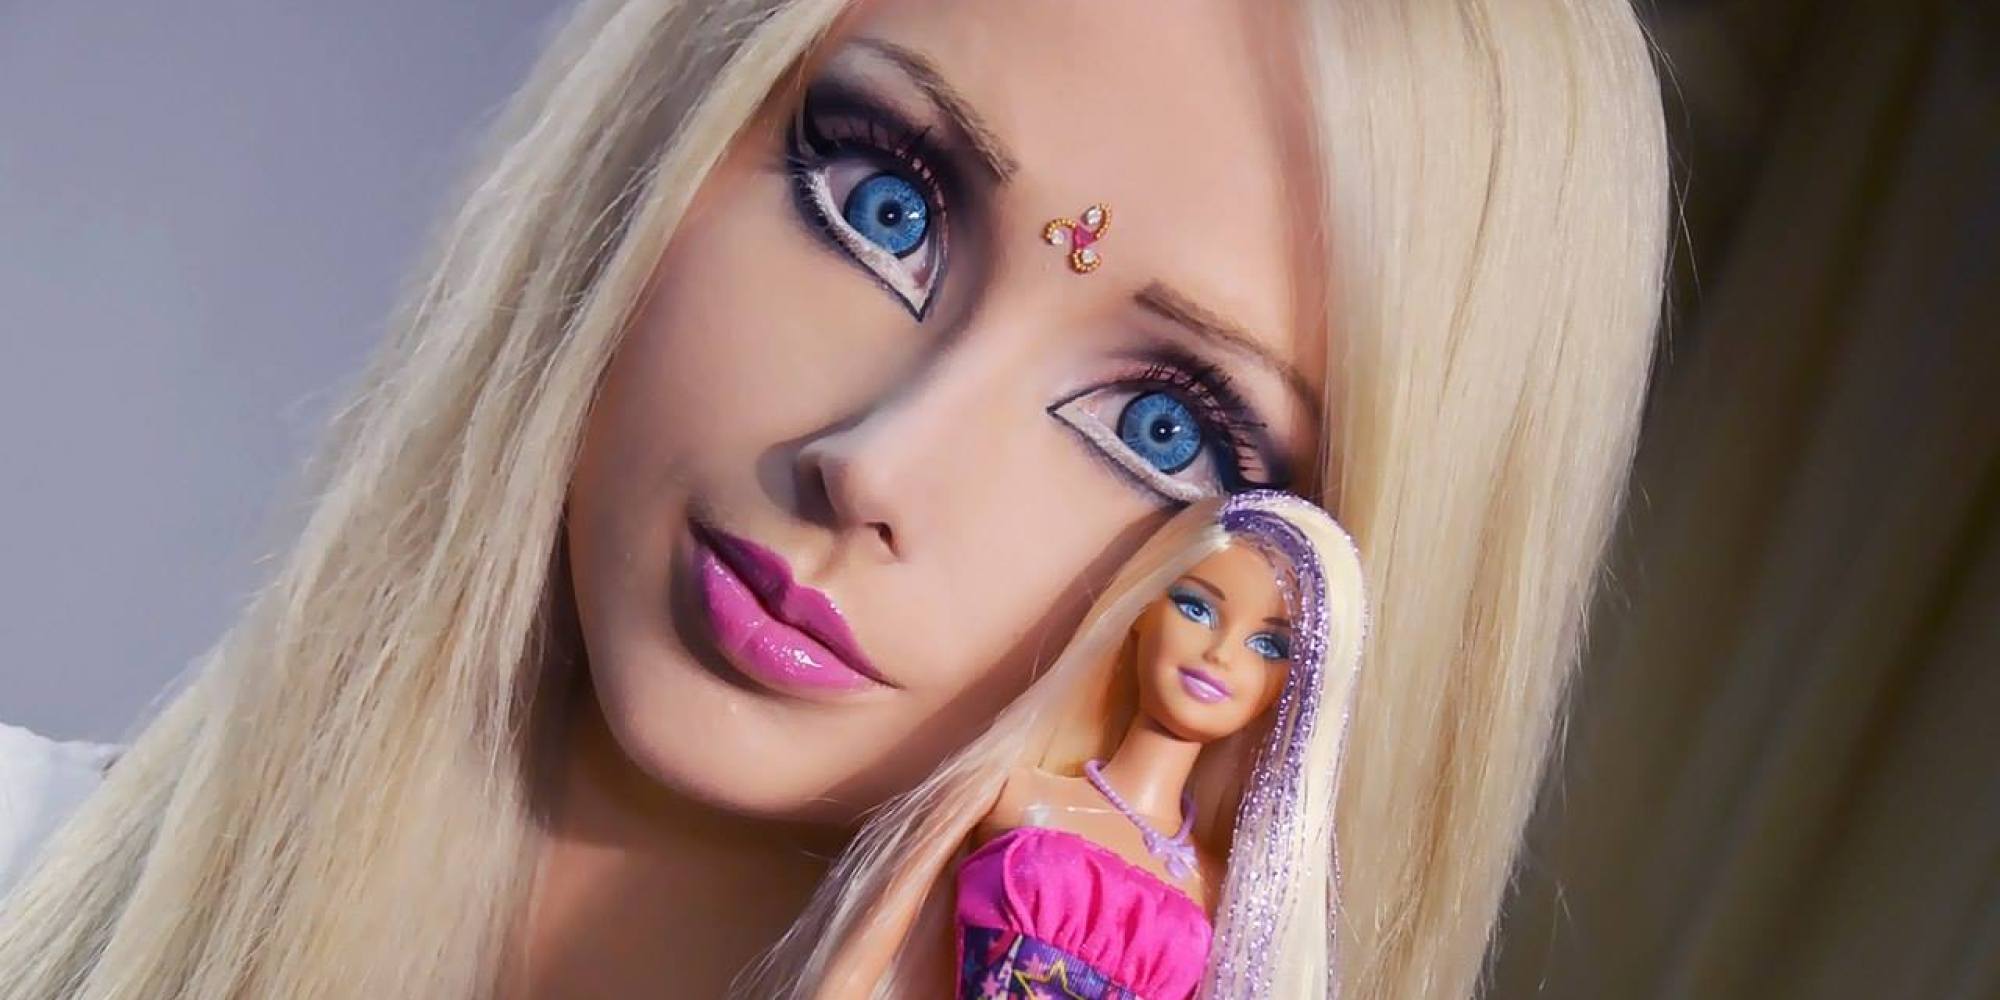 Human barbie feature